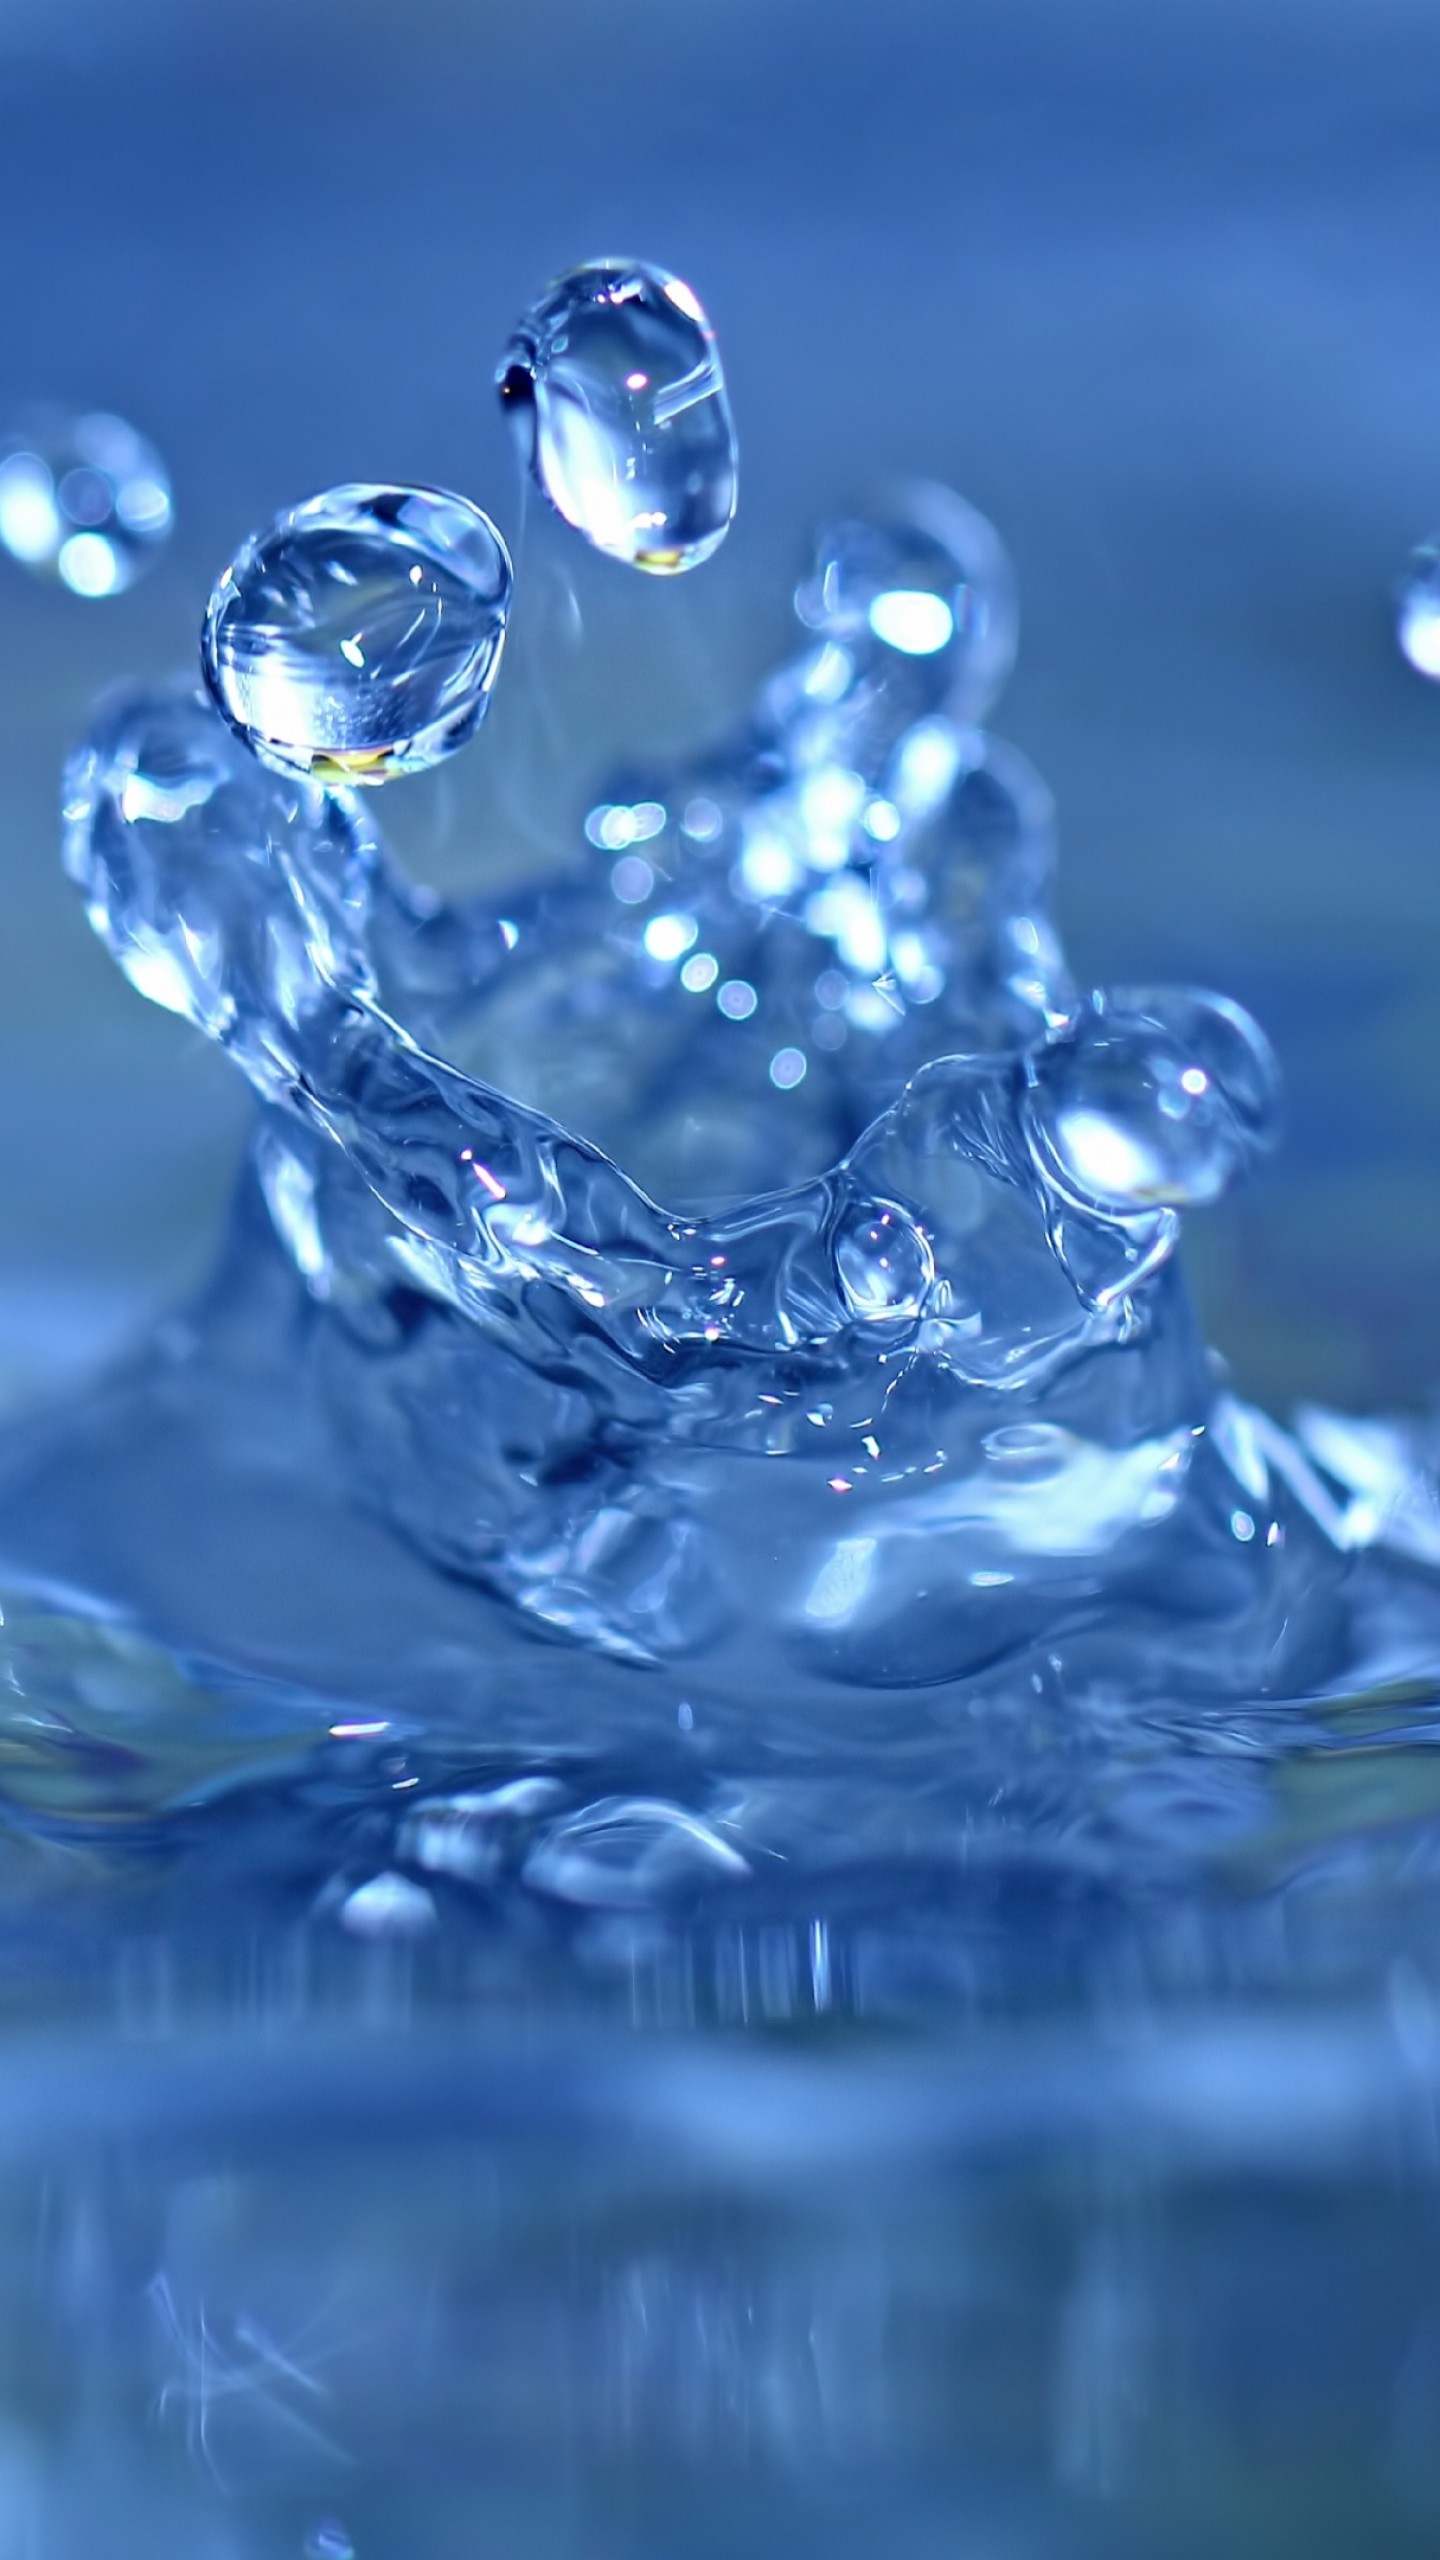 3 gotas de agua fría fondo de pantalla hd,agua,azul,soltar,recursos hídricos,material transparente